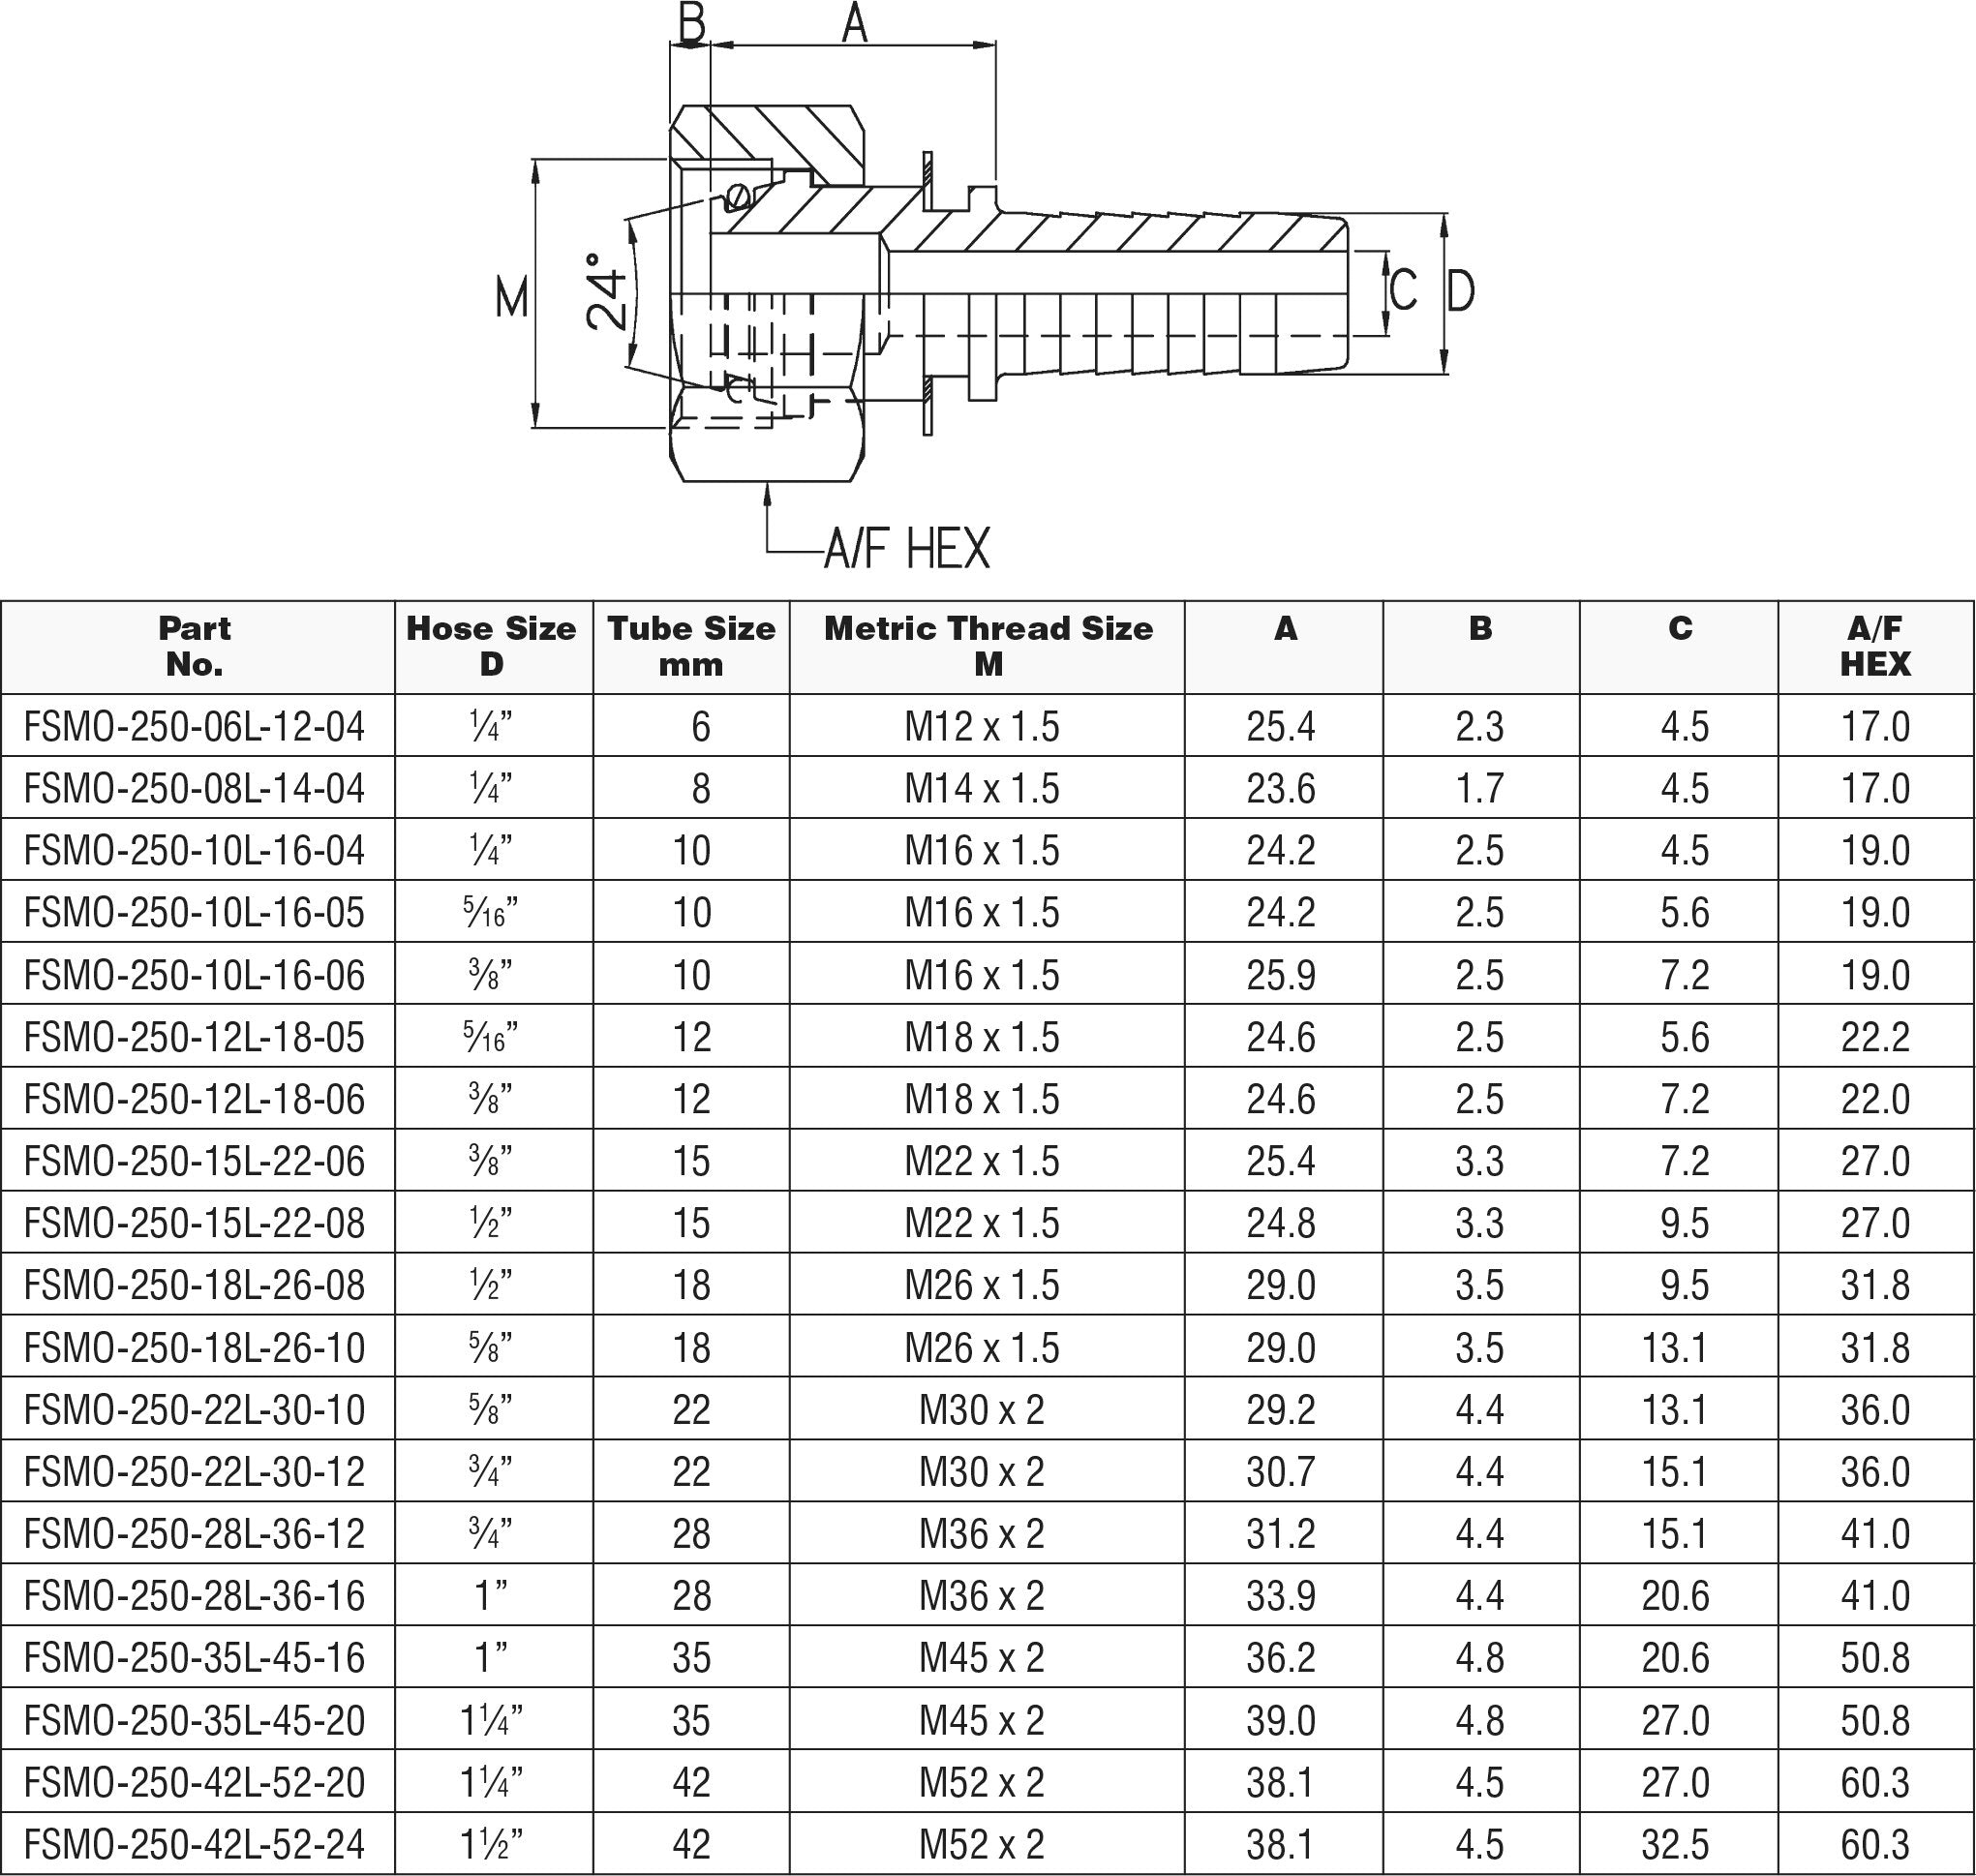 M22x1.5 (14S) O-RING SWIVEL FEMALE x 3/8" HYDRAULIC HOSETAIL-FSMO-250-14S-22-06 - Custom Fittings